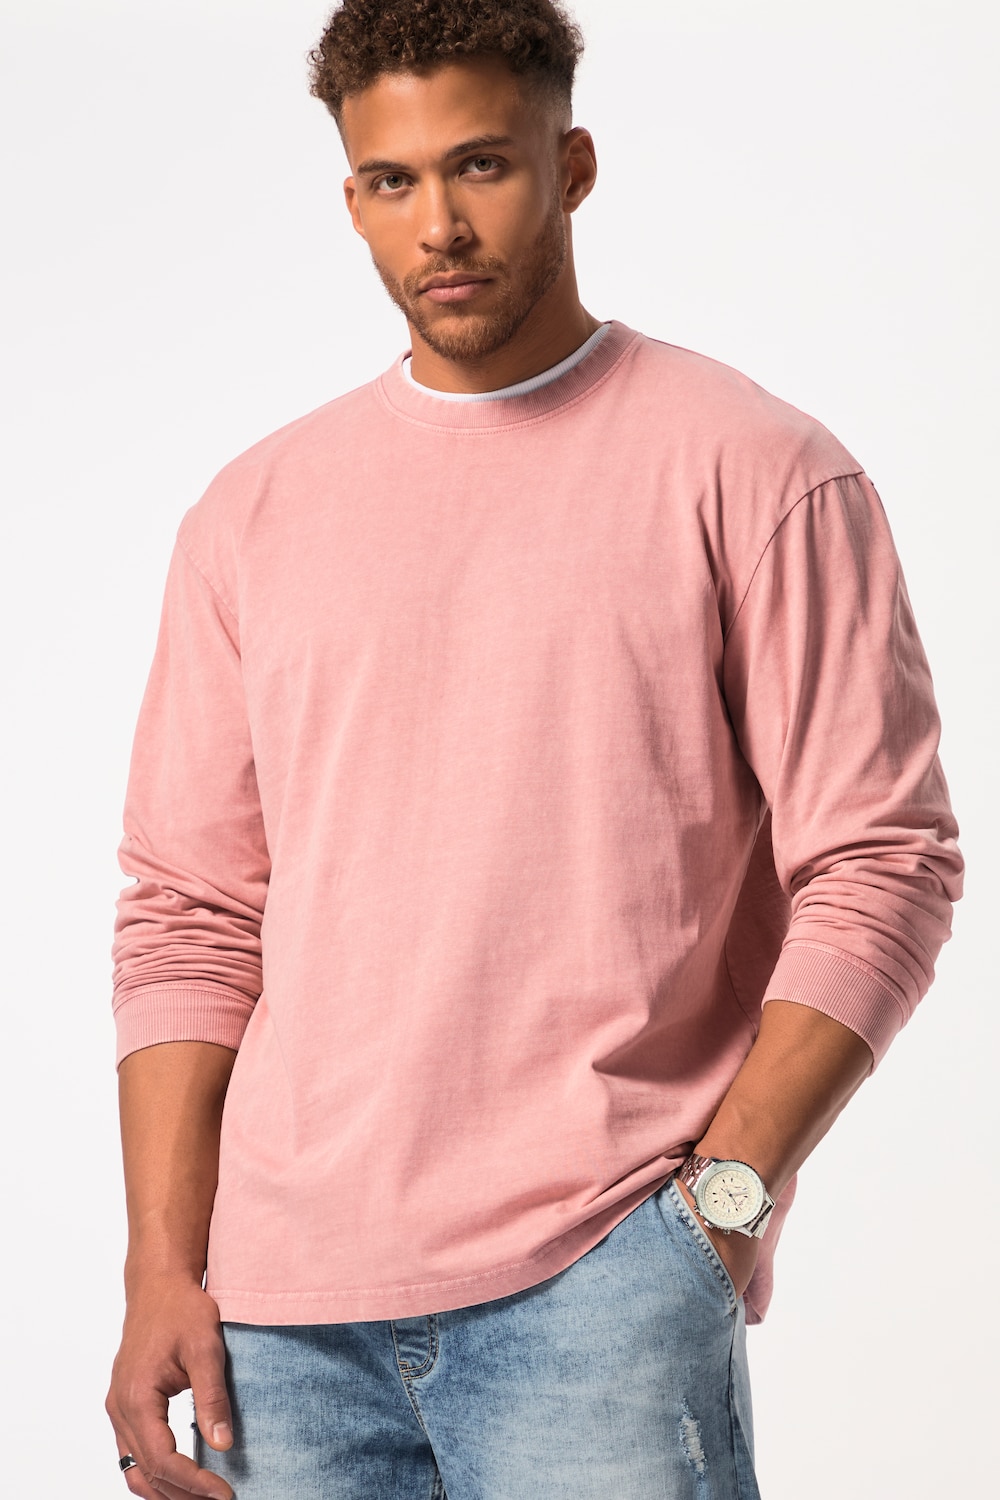 Grote Maten STHUGE shirt met lange mouwenmale, roze, Maat: 3XL, Katoen, STHUGE